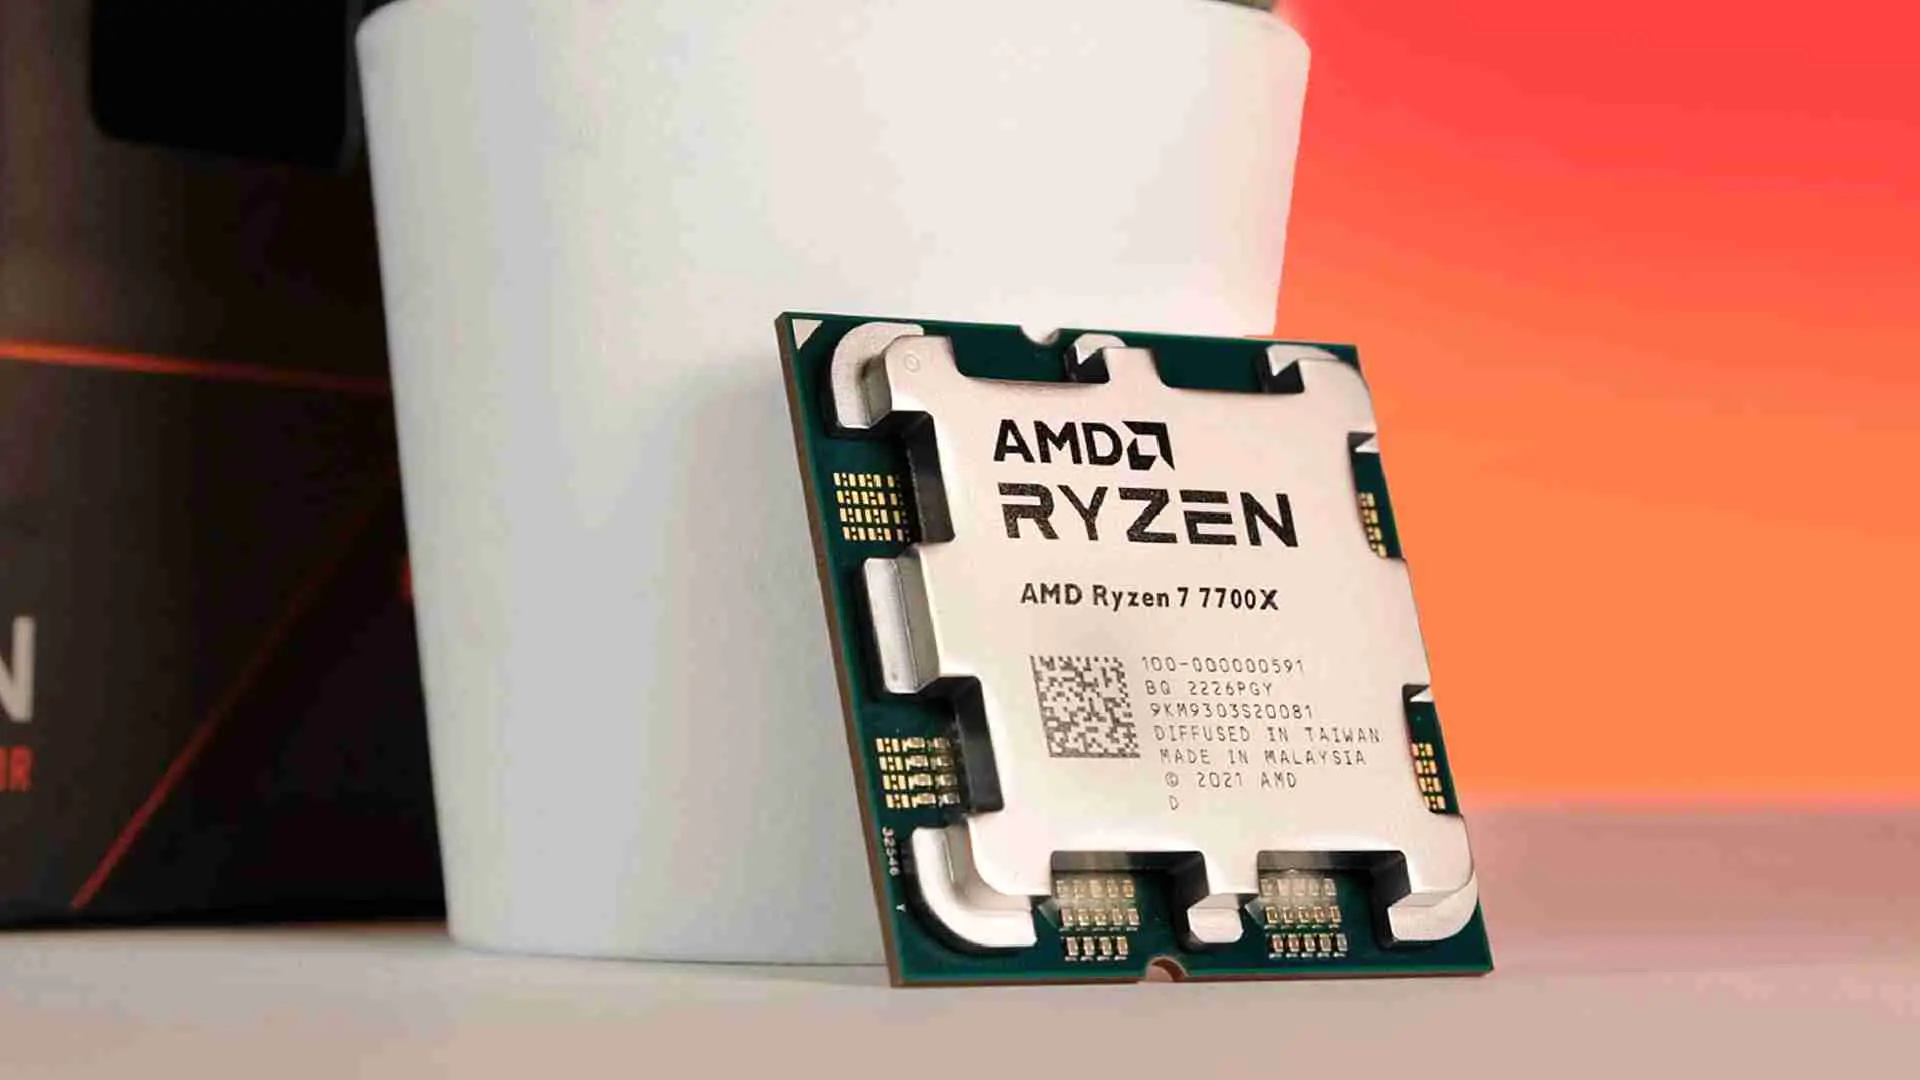 AMD Ryzen 7700X Review